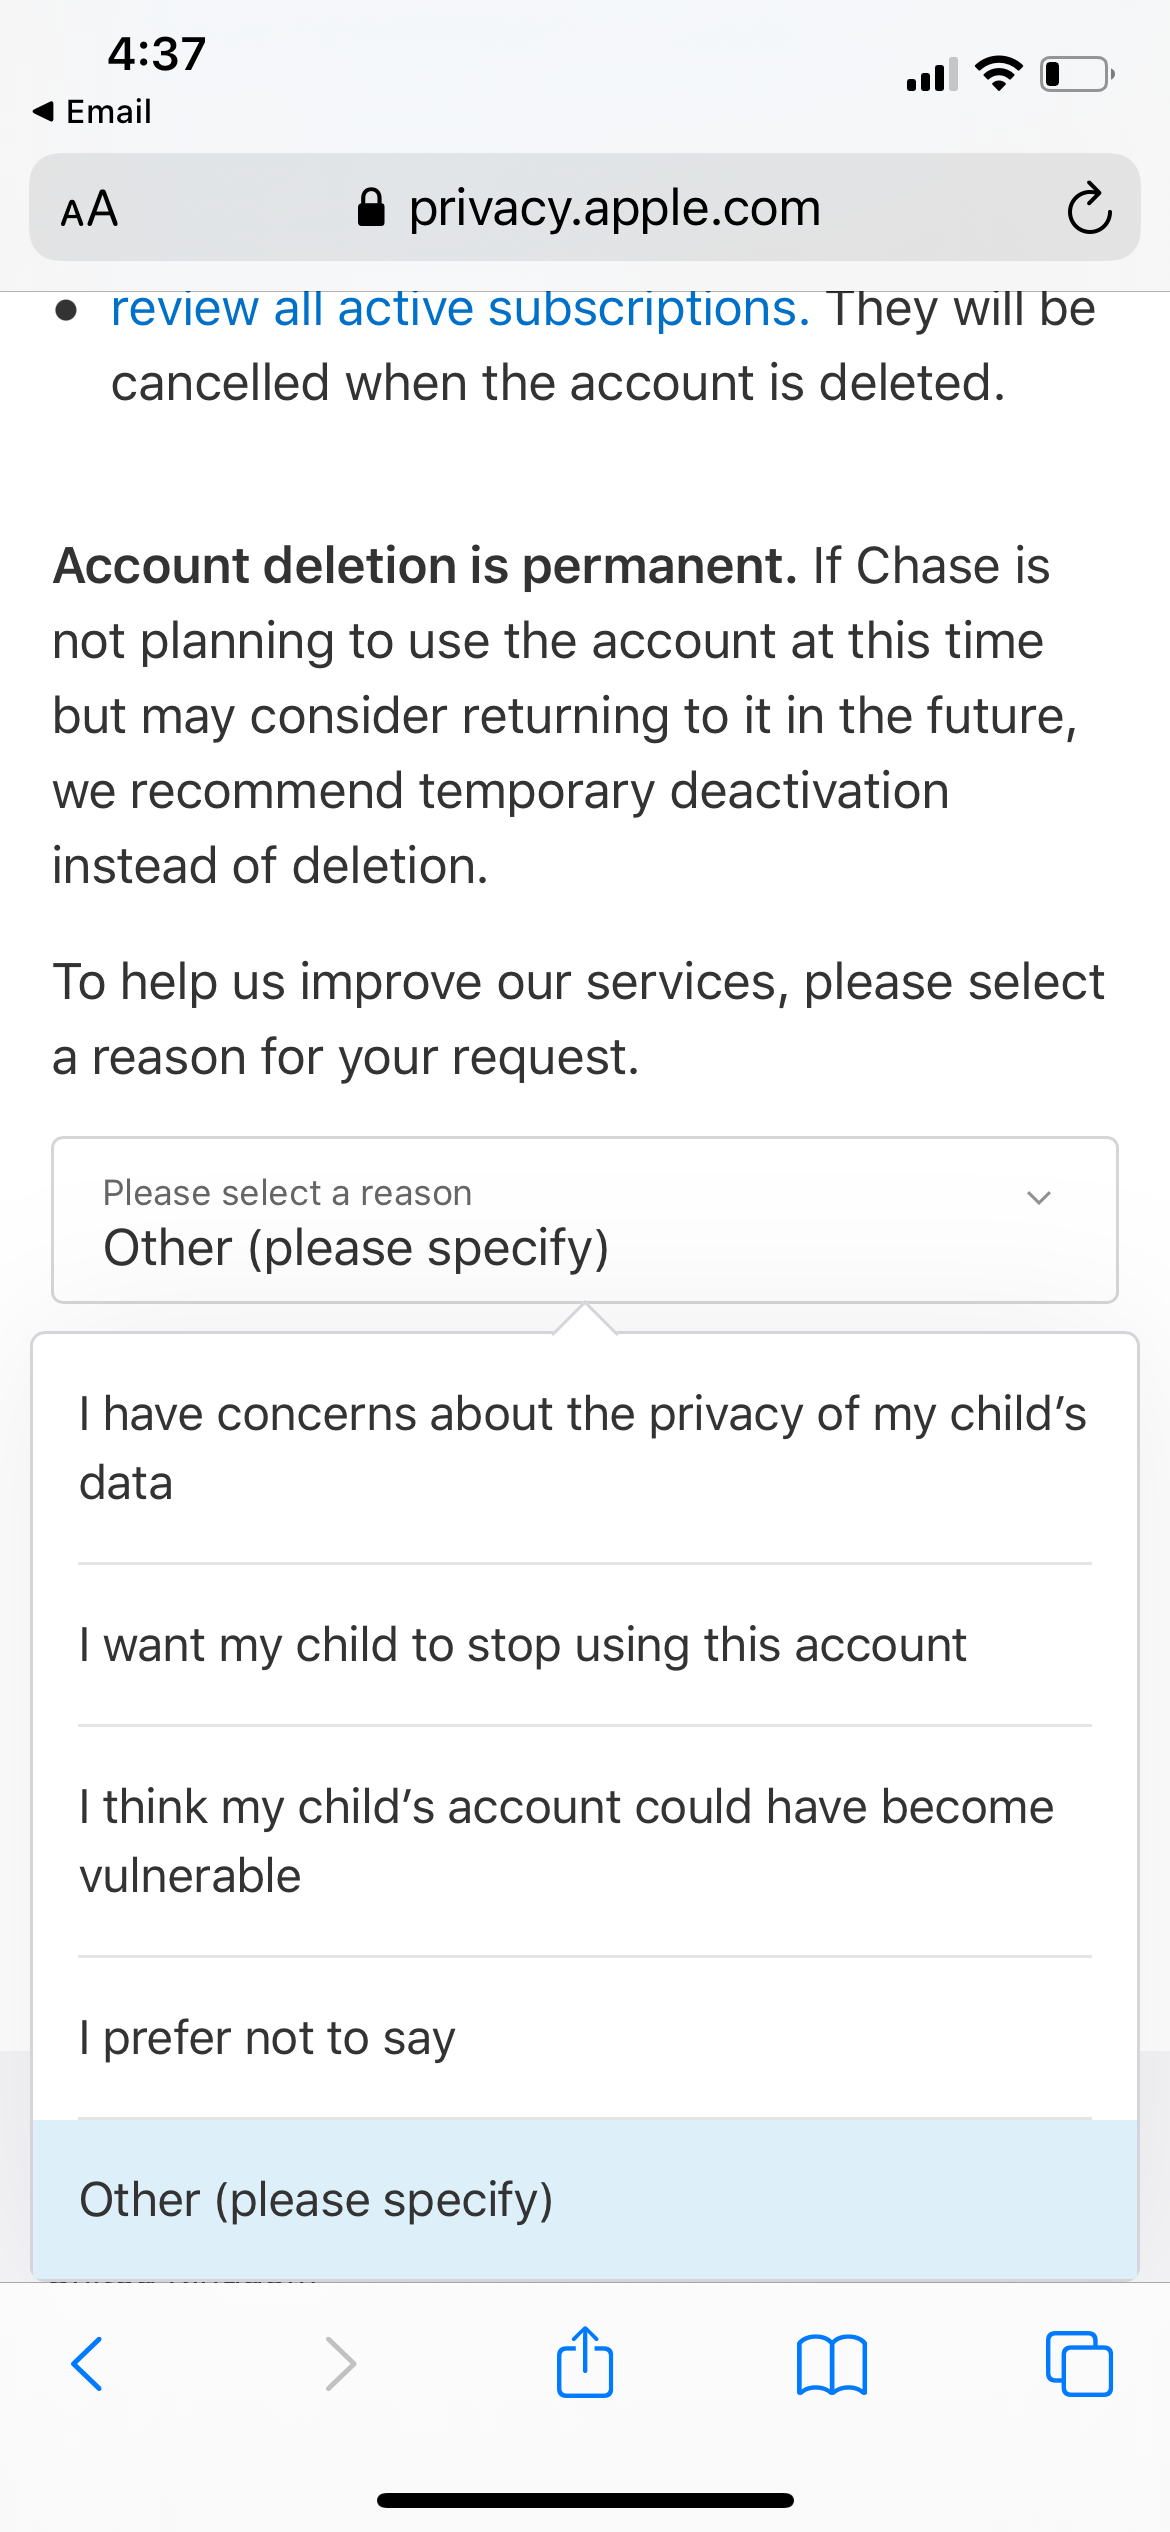 Choosing Reason for Deleting Account